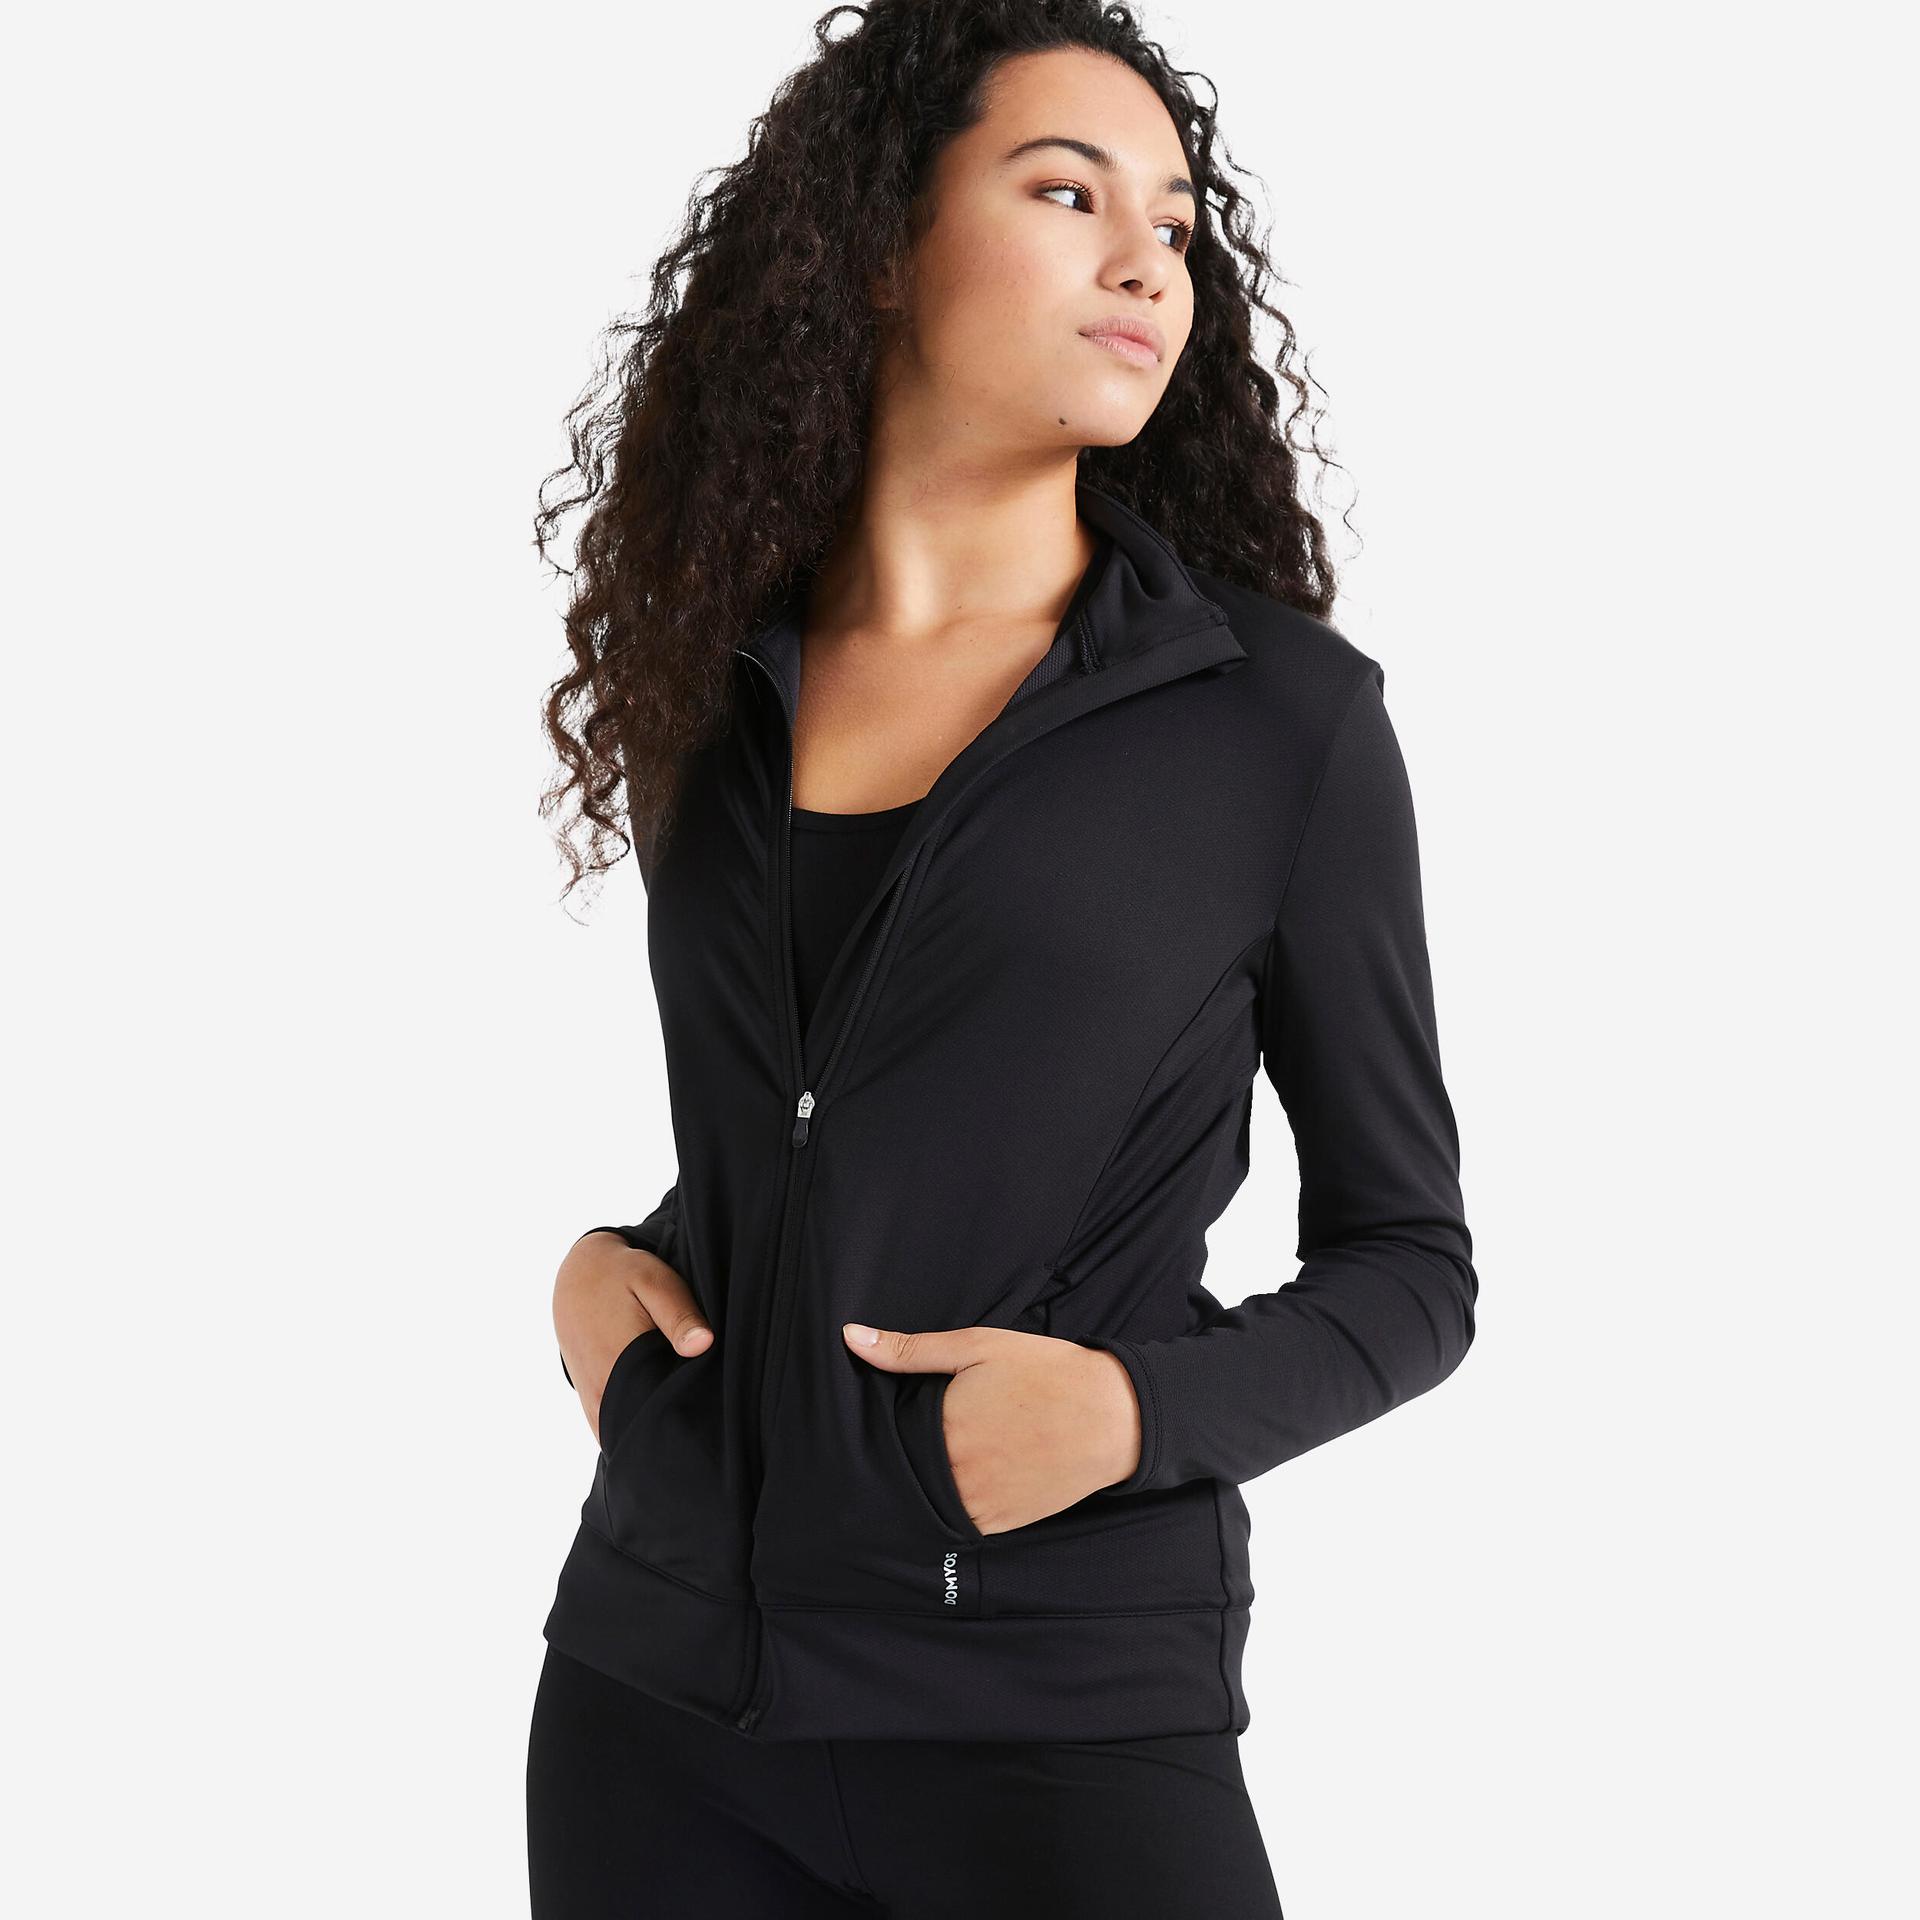 women's-straight-cut-fitness-cardio-jacket---black